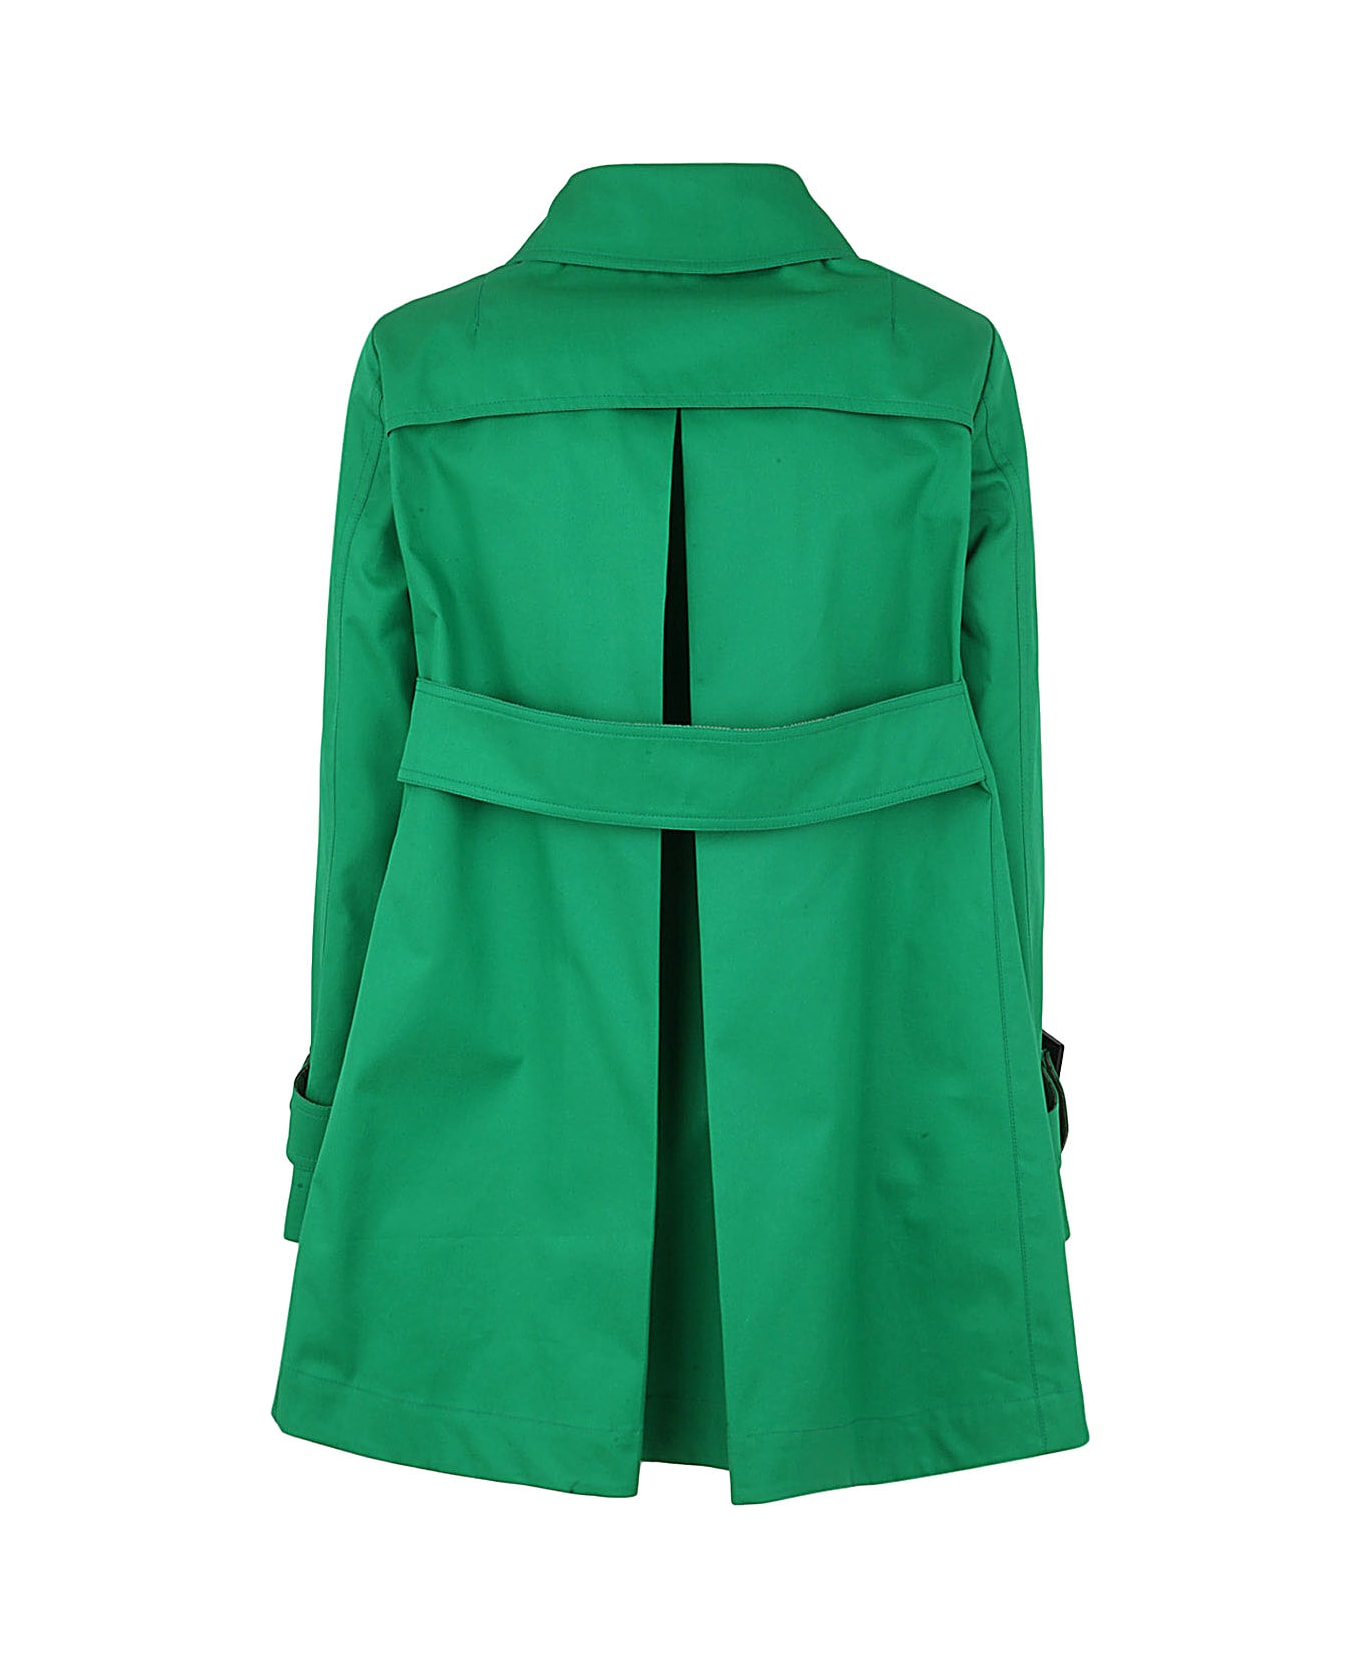 Herno Delon A-shape Double Breasted Long Jacket - Jolly Green レインコート